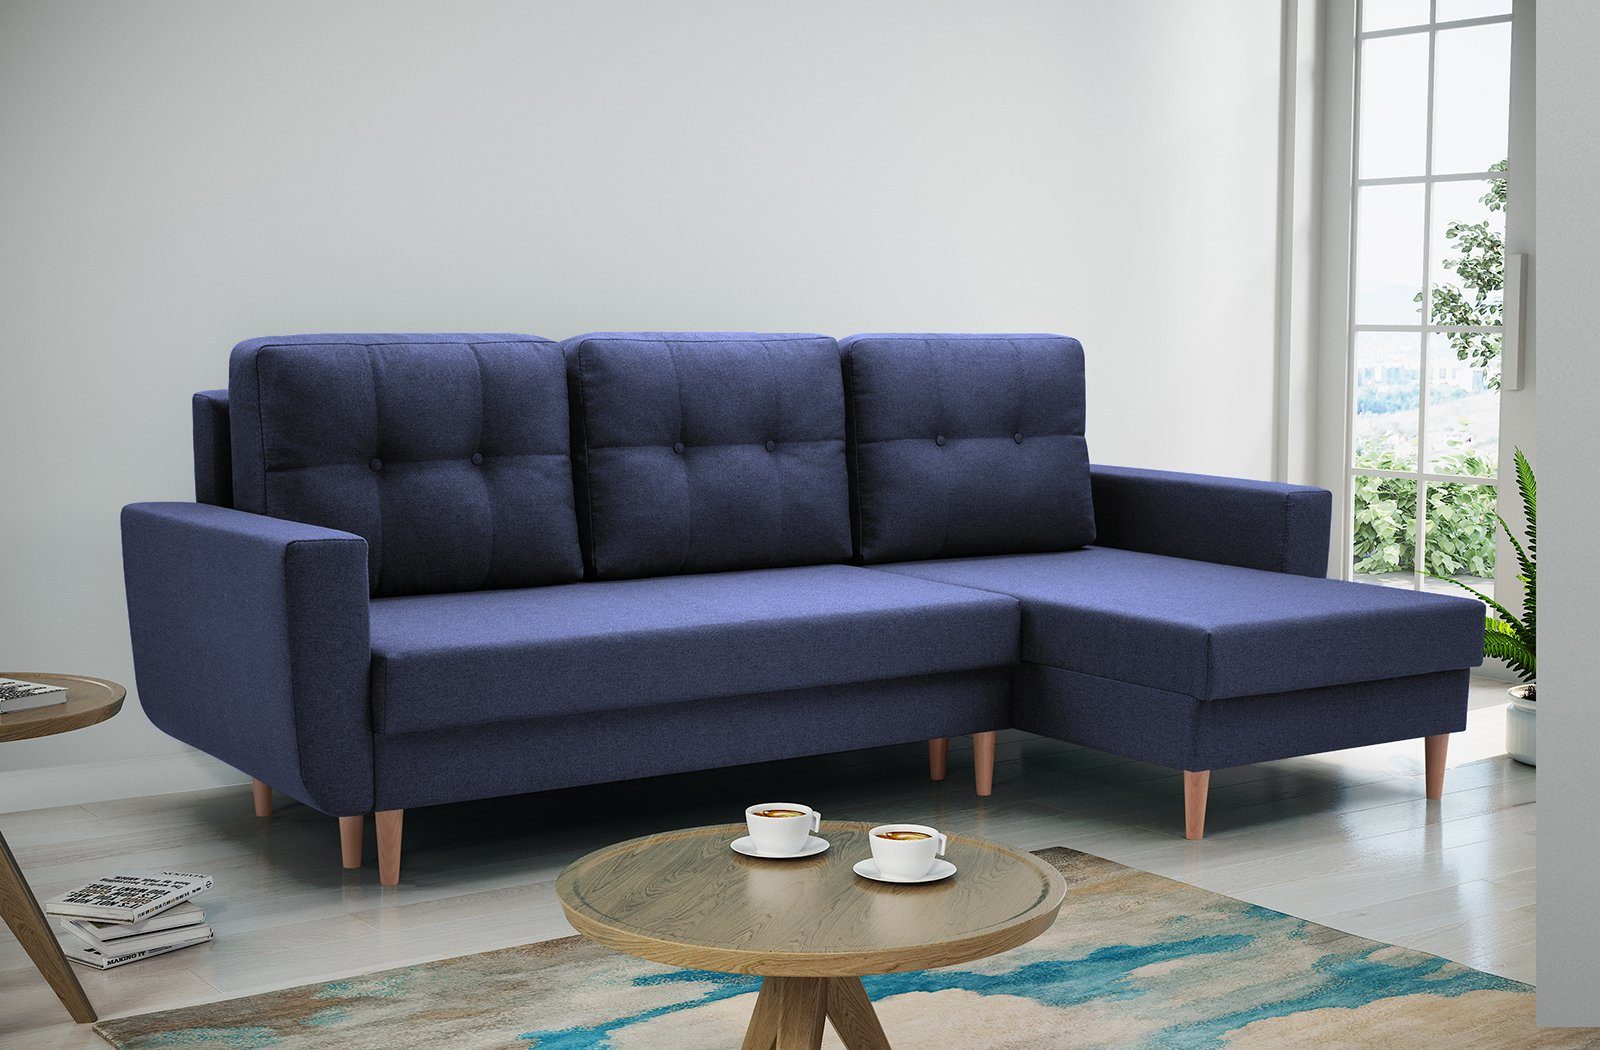 Beautysofa Polsterecke Couch Sofa Ecksofa ONLY, mit Schlaffunktion, mit universelle mane Marienblau (malmo new 79)